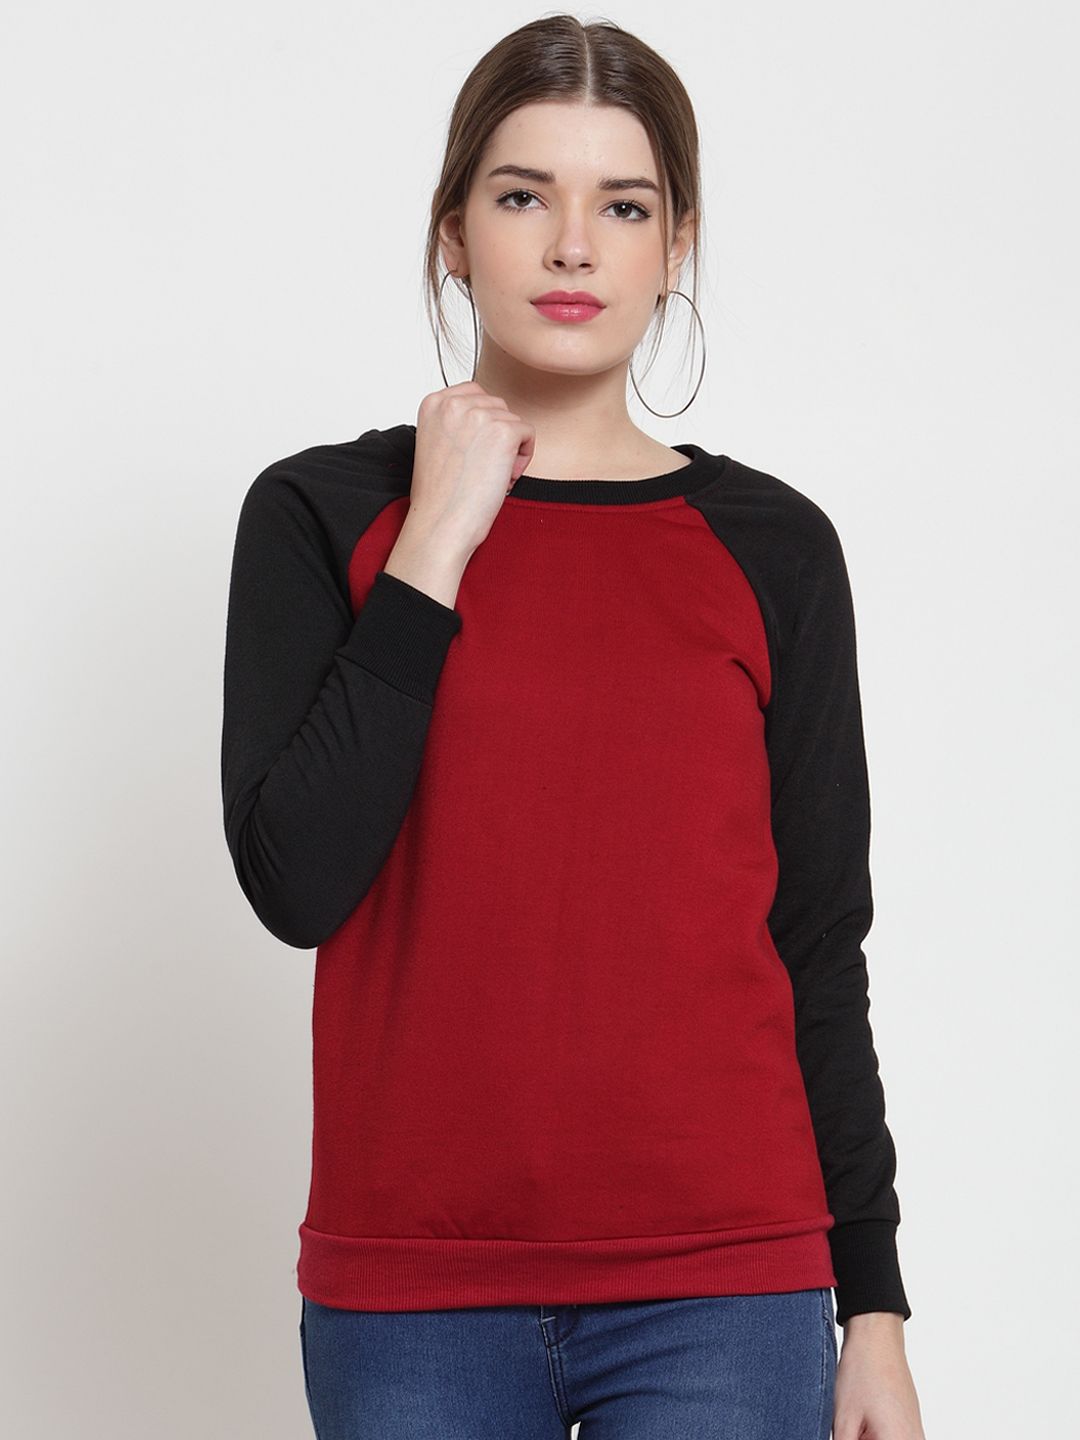 Belle Fille Women Maroon & Black Colourblocked Sweatshirt Price in India